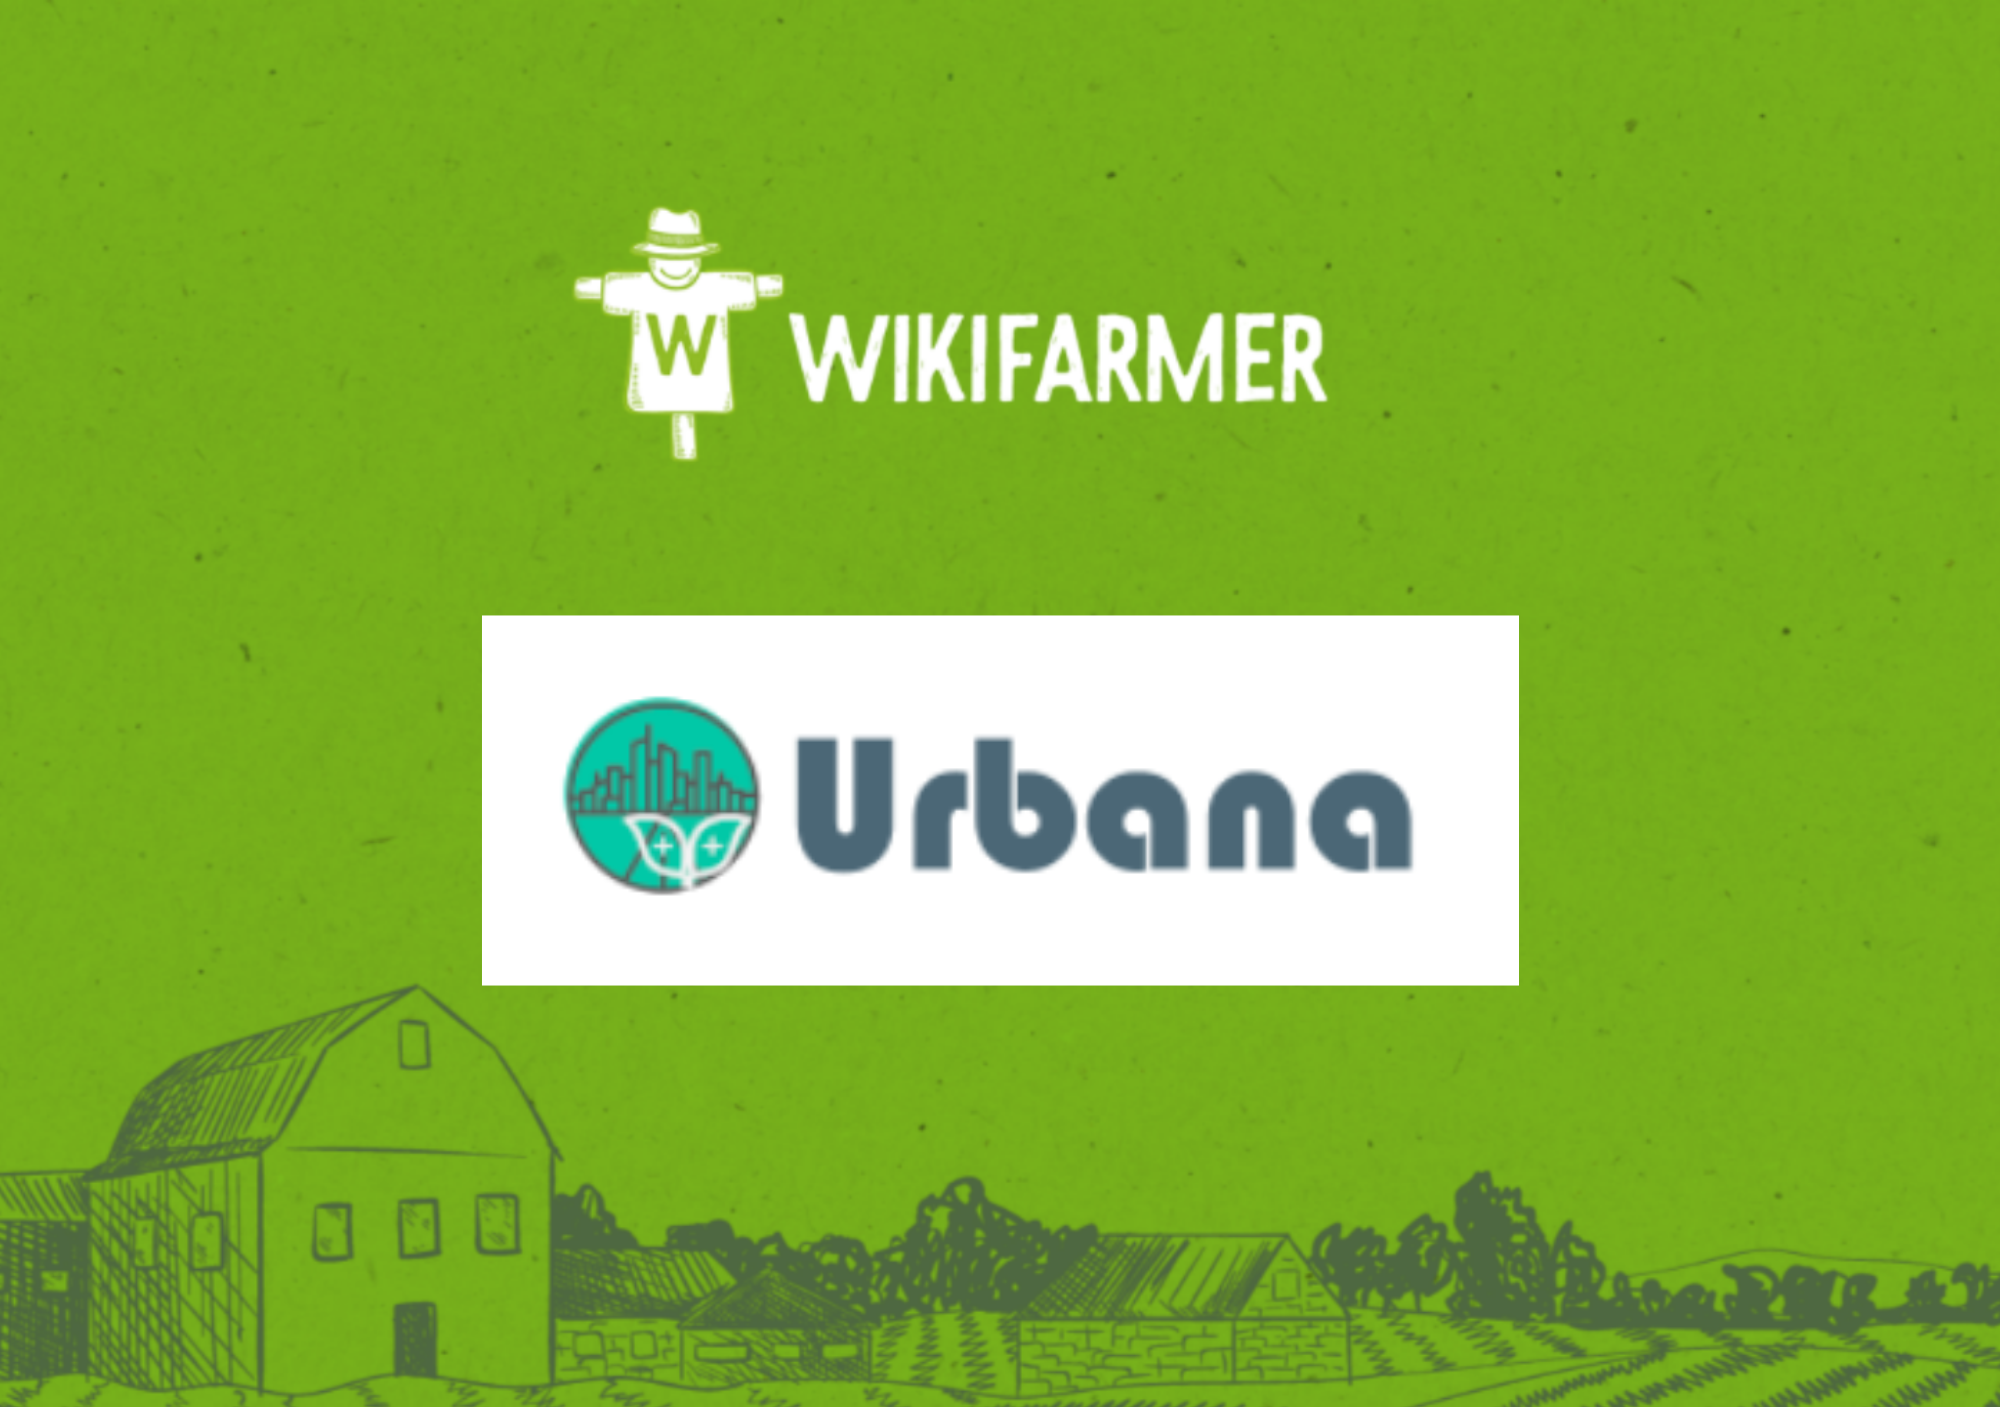 Partnership between Wikifarmer and Urbana